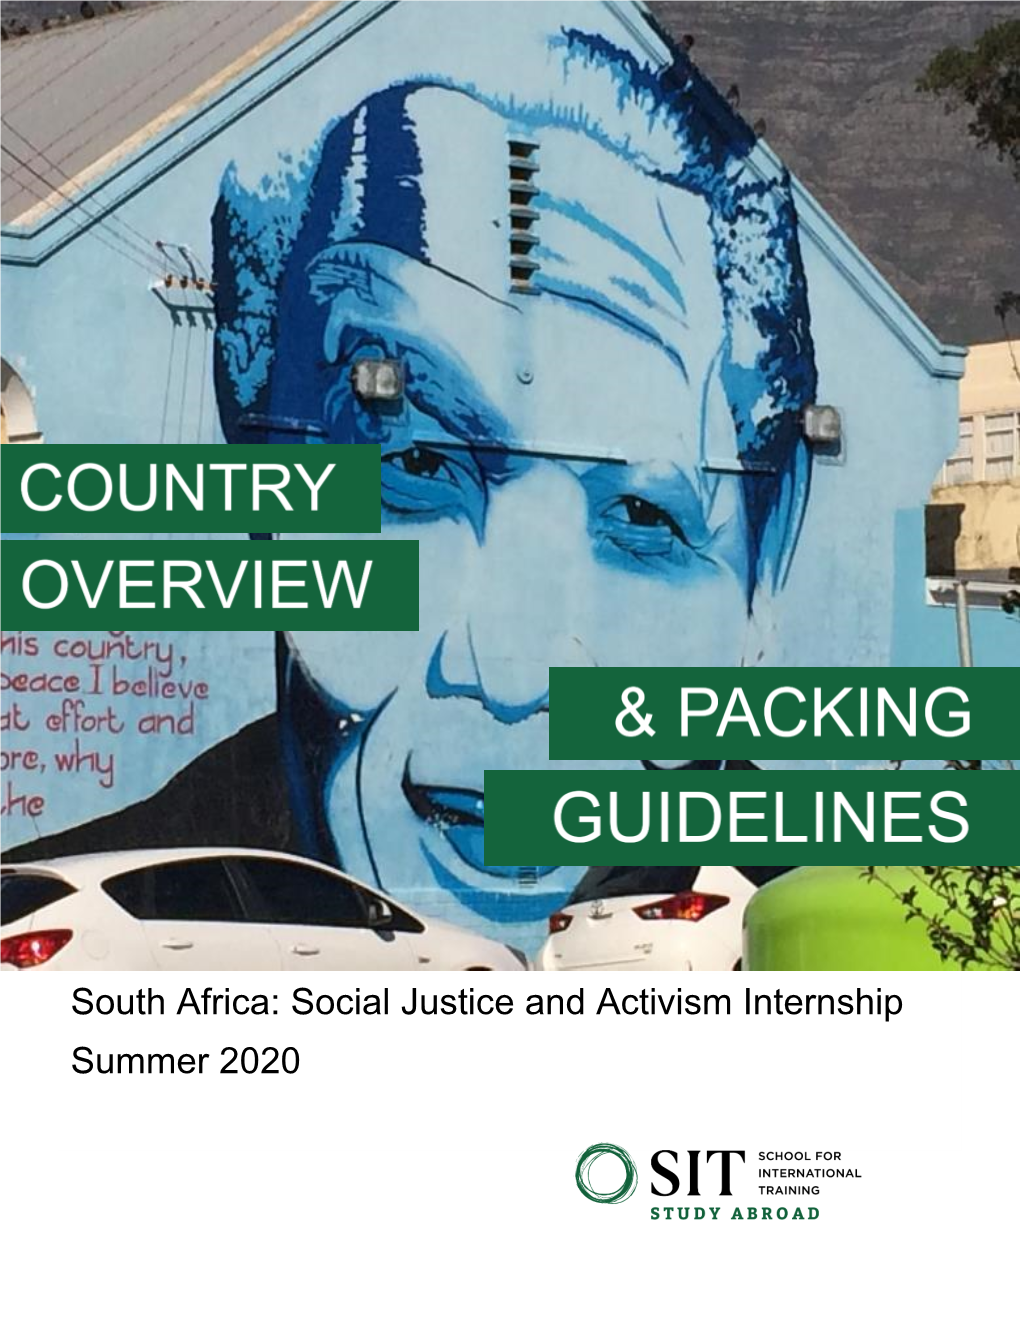 South Africa: Social Justice and Activism Internship Summer 2020